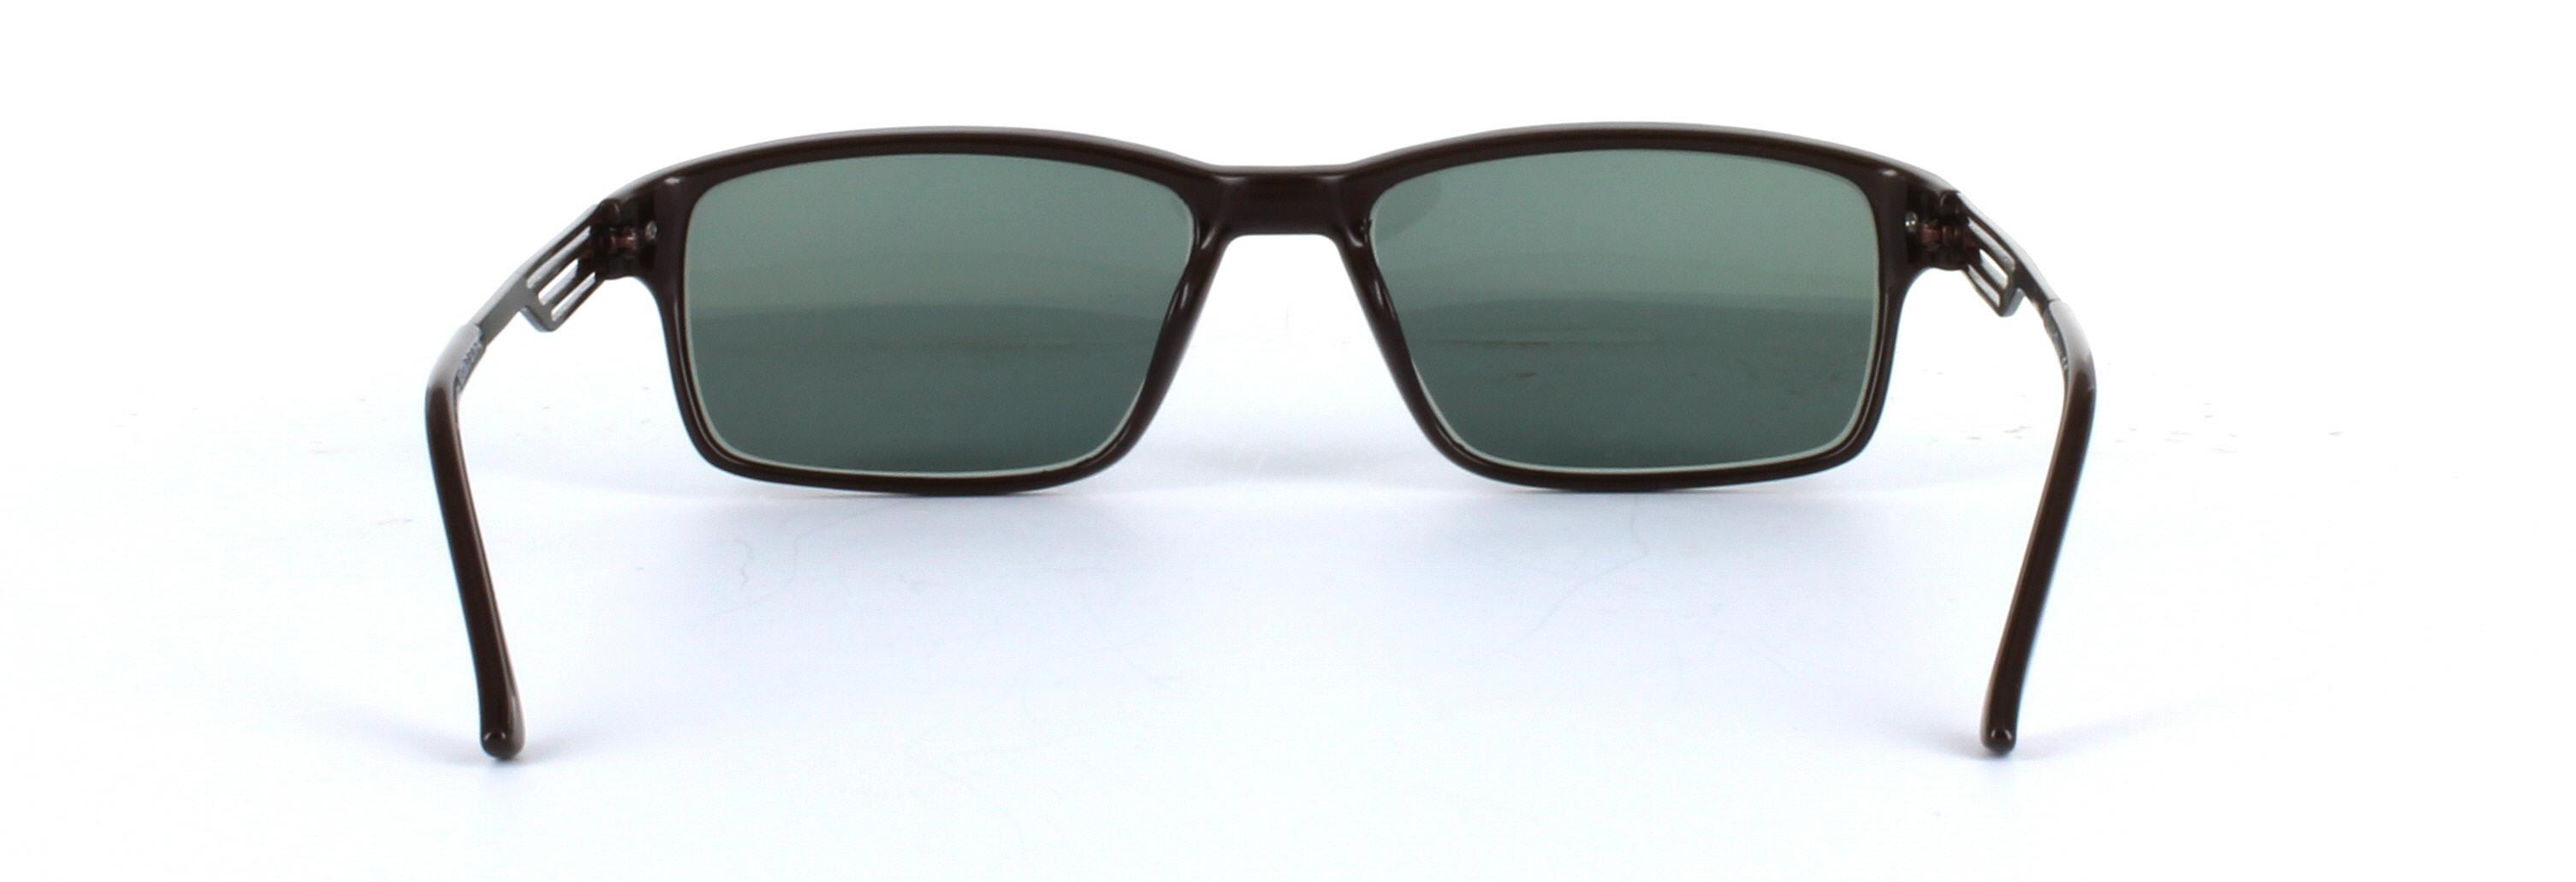 Boston Brown Full Rim Rectangular Plastic Sunglasses - Image View 3